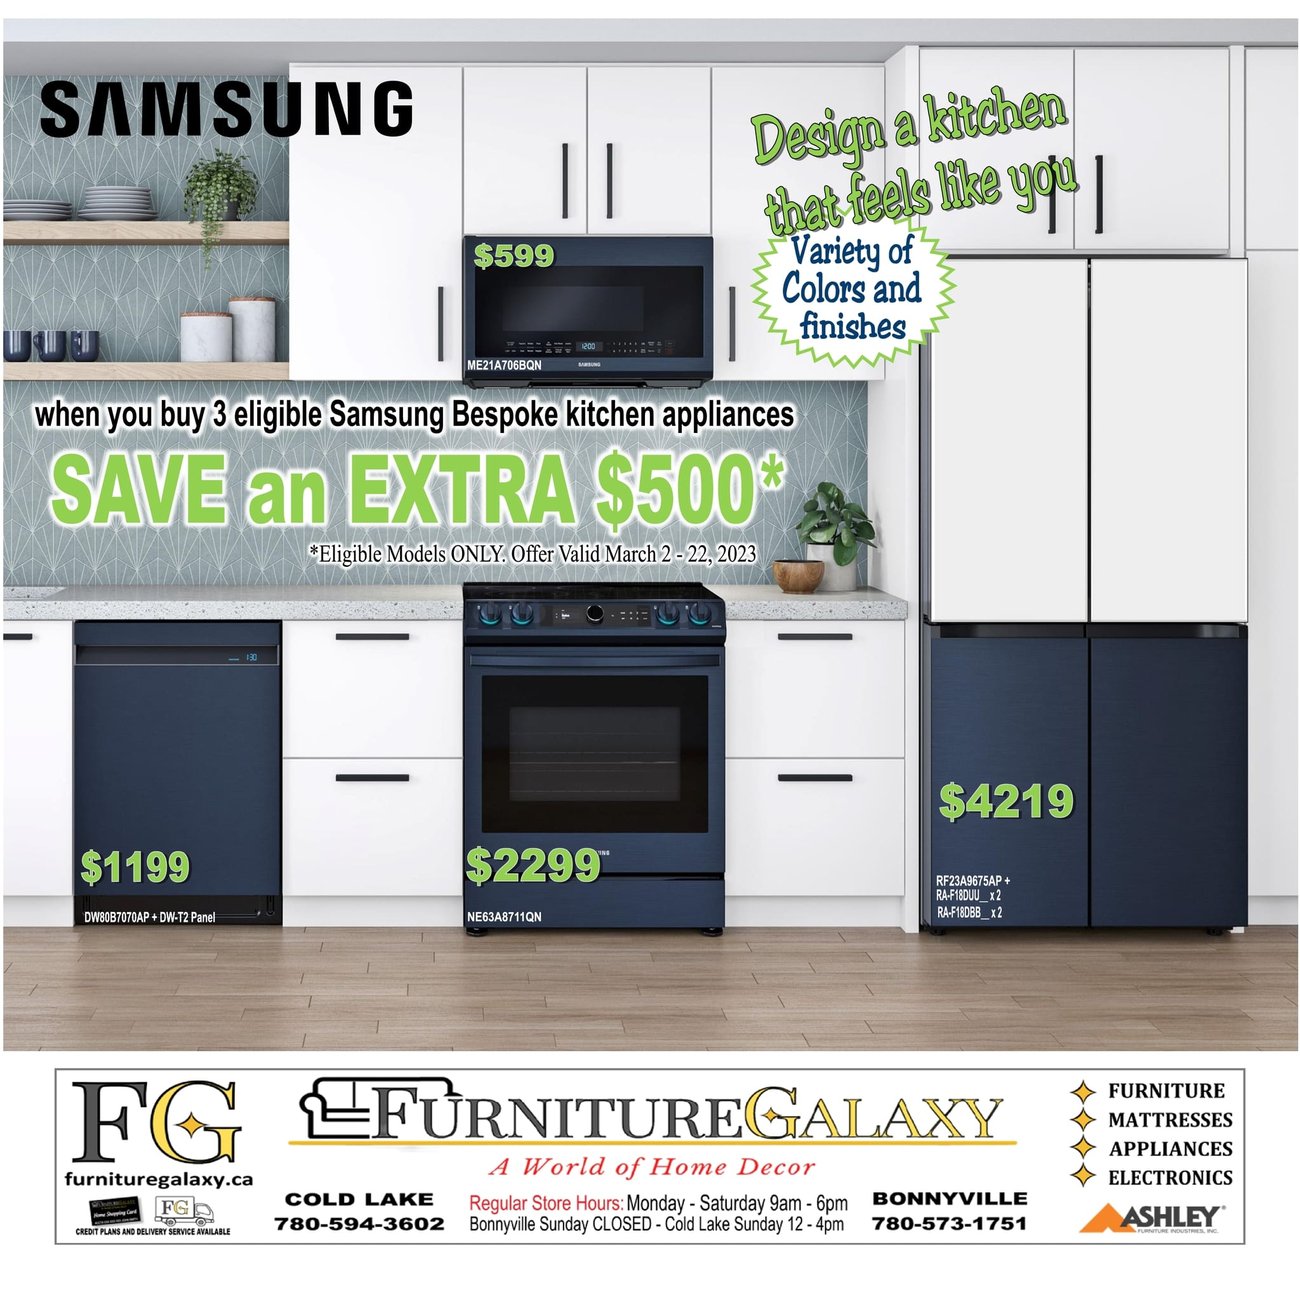 Furniture Galaxy - Samsung Flyer Specials - Page 4